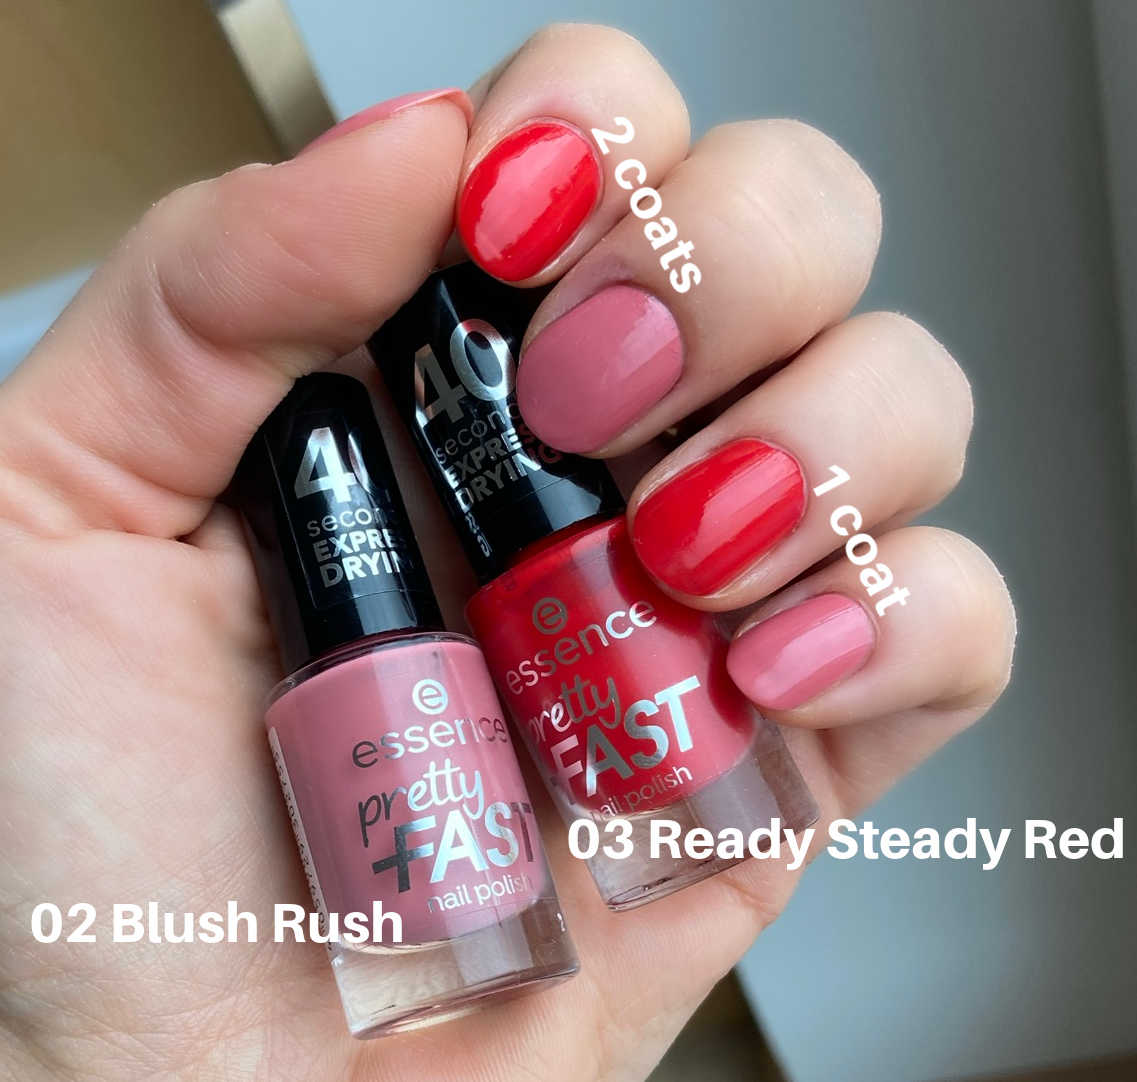 Essence Pretty Fast nail polish 02 Blush Rush and 03 Ready Steady Red 